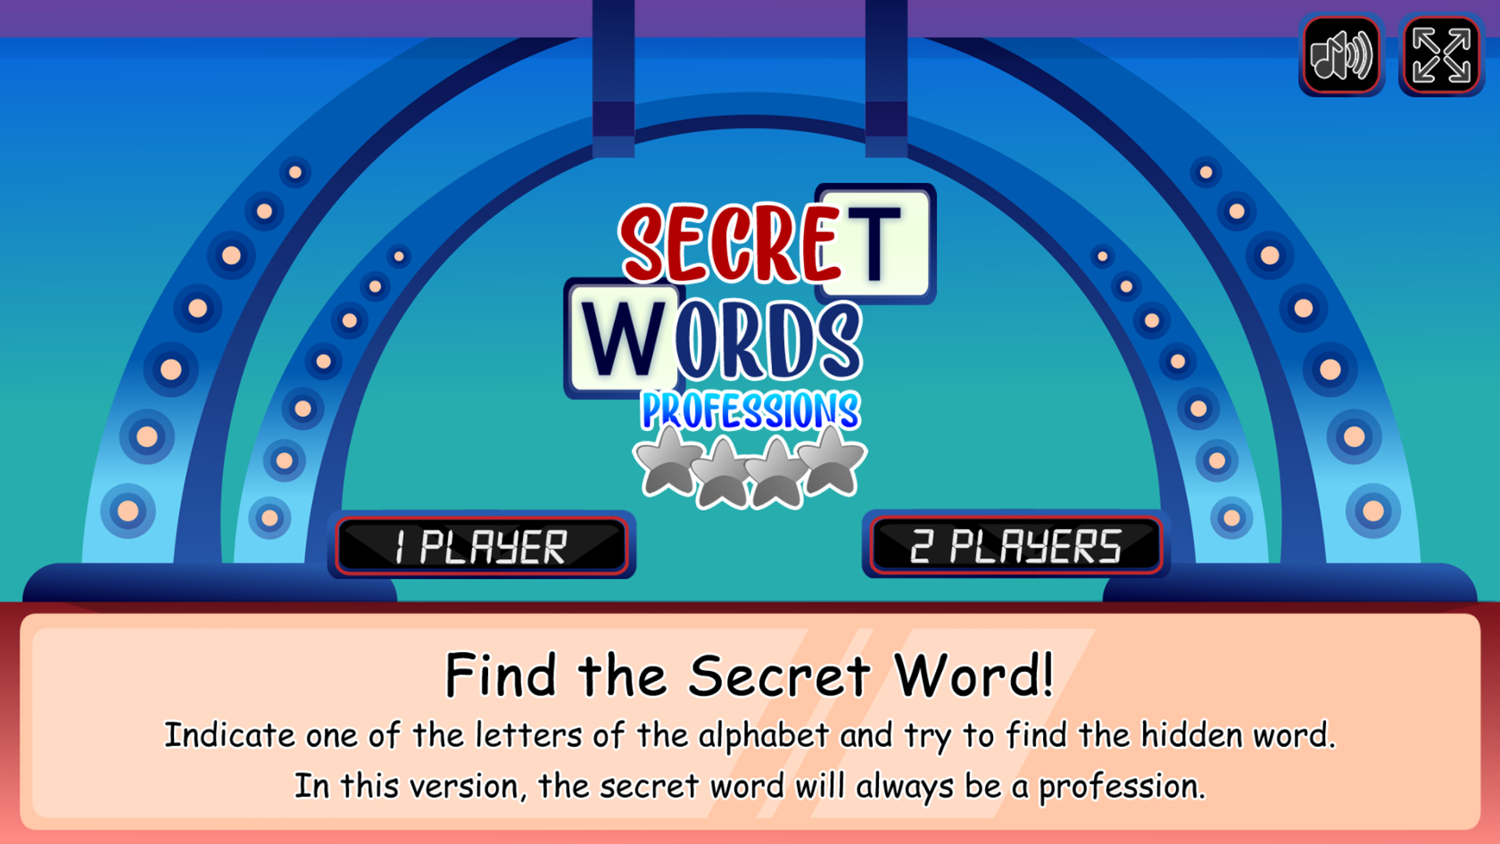 Secret Words Professions Game Welcome Screen Screenshot.